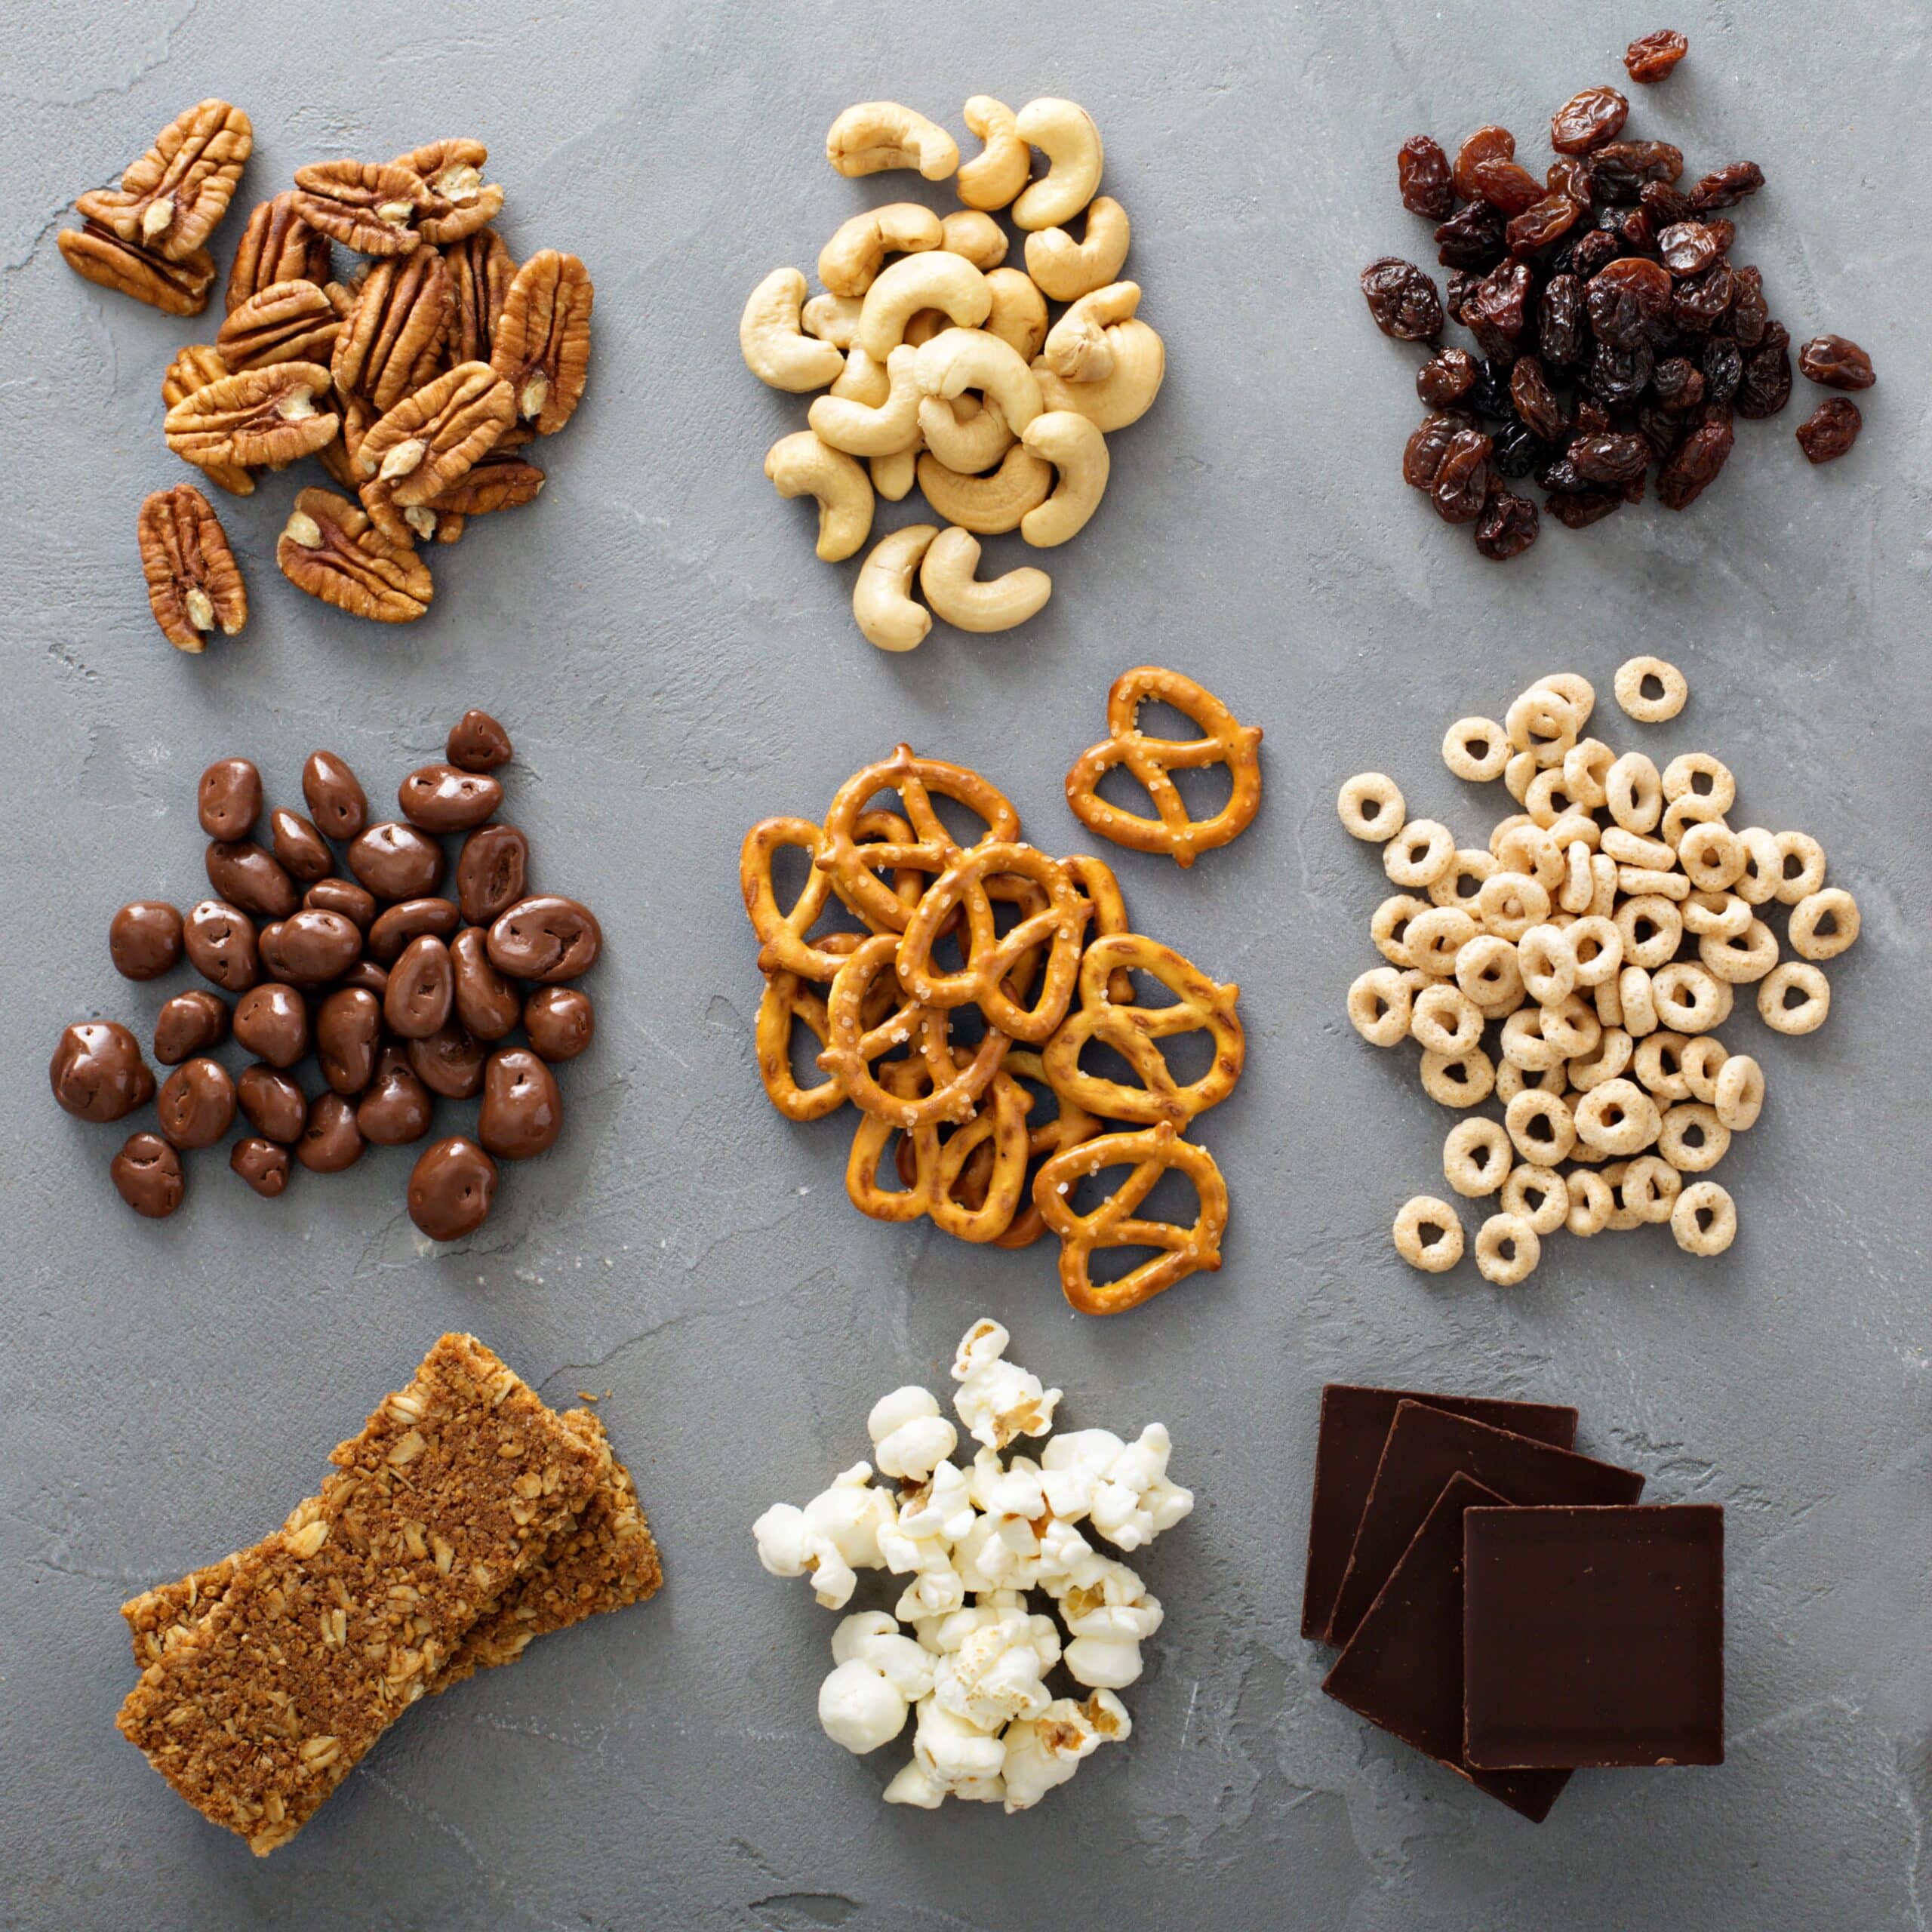 Small piles of healthy snacks like nuts, raisins, pretzels, popcorn, dark chocolate